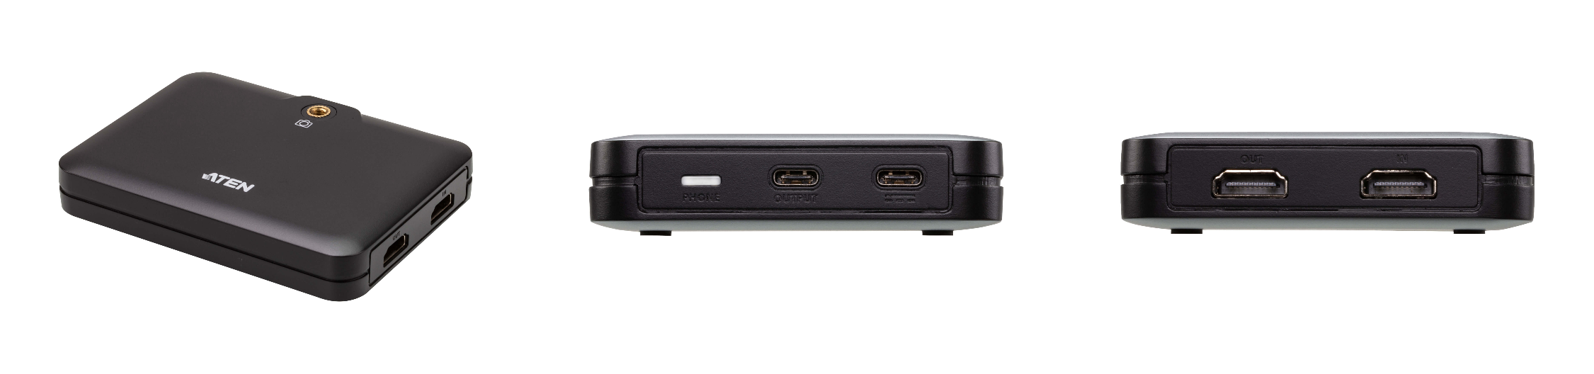 USB-C/Thunderbolt 3接続のビデオキャプチャー「UC3021」が発売中